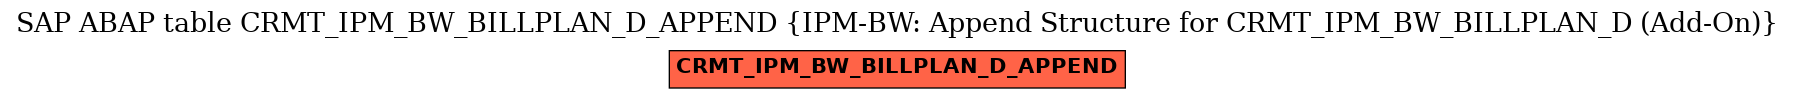 E-R Diagram for table CRMT_IPM_BW_BILLPLAN_D_APPEND (IPM-BW: Append Structure for CRMT_IPM_BW_BILLPLAN_D (Add-On))